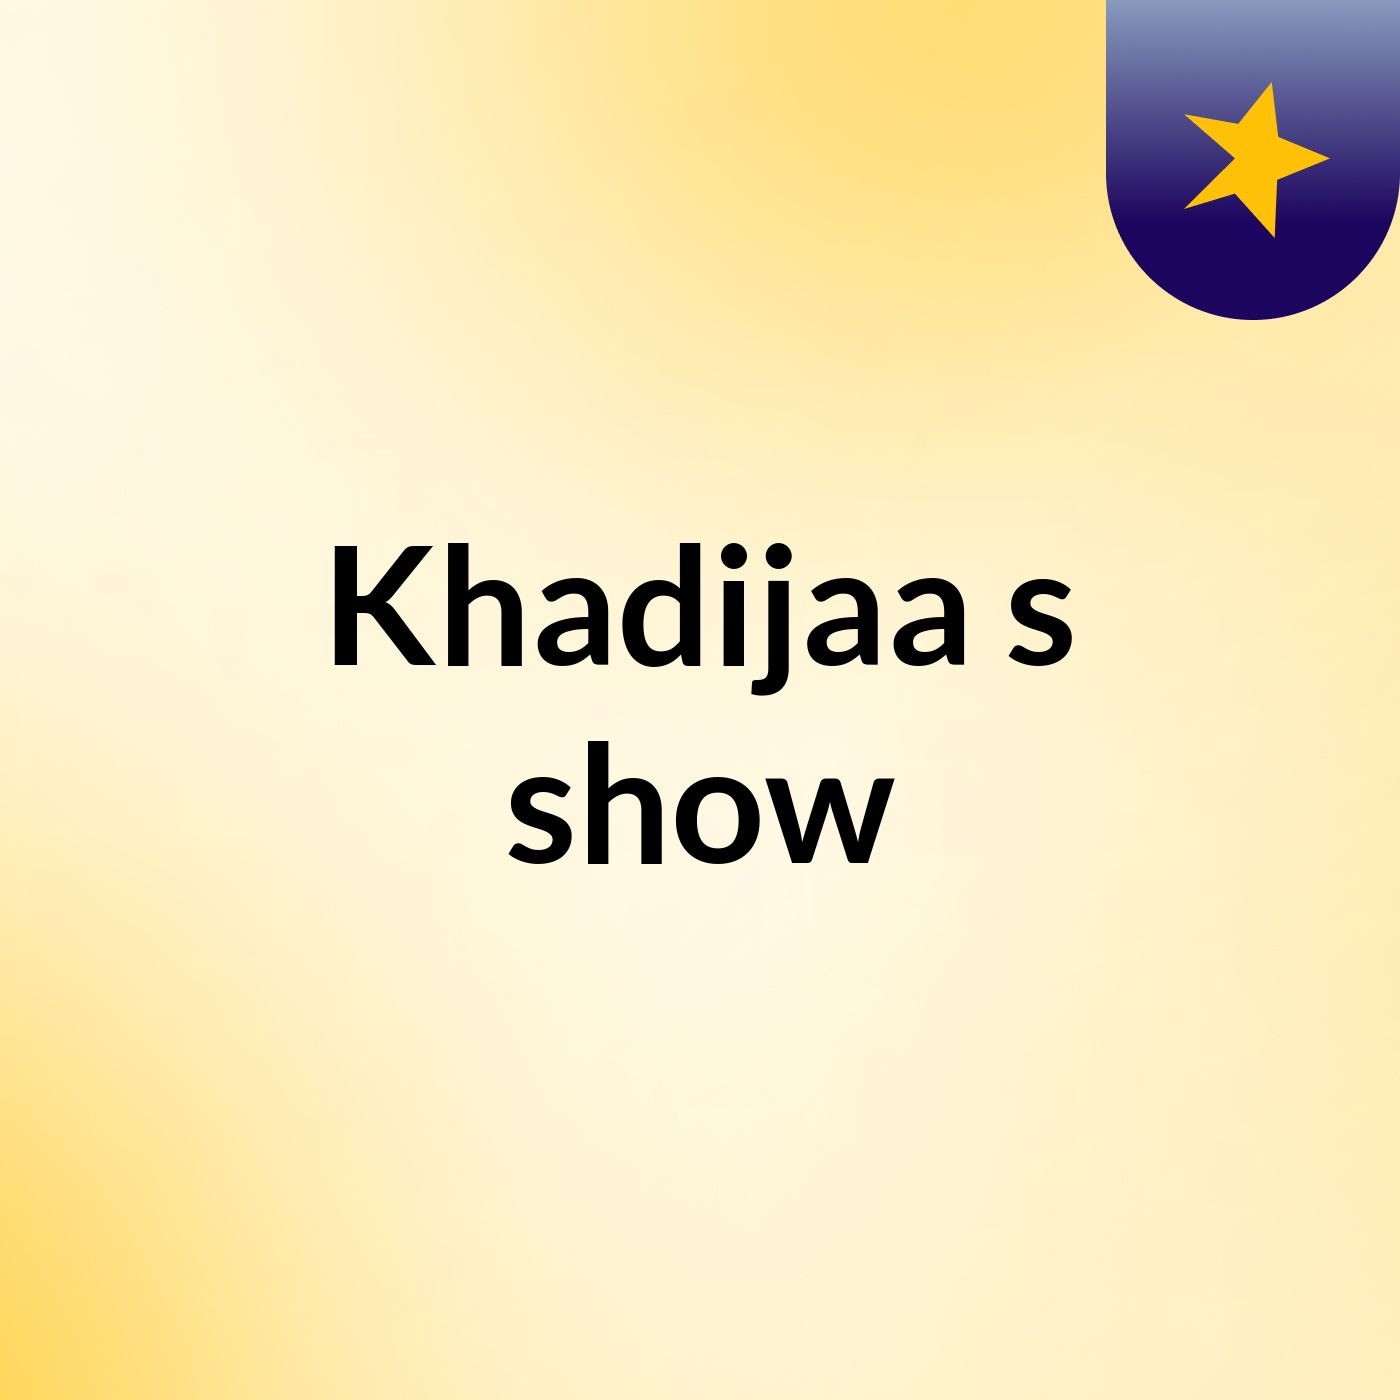 Khadijaa's show